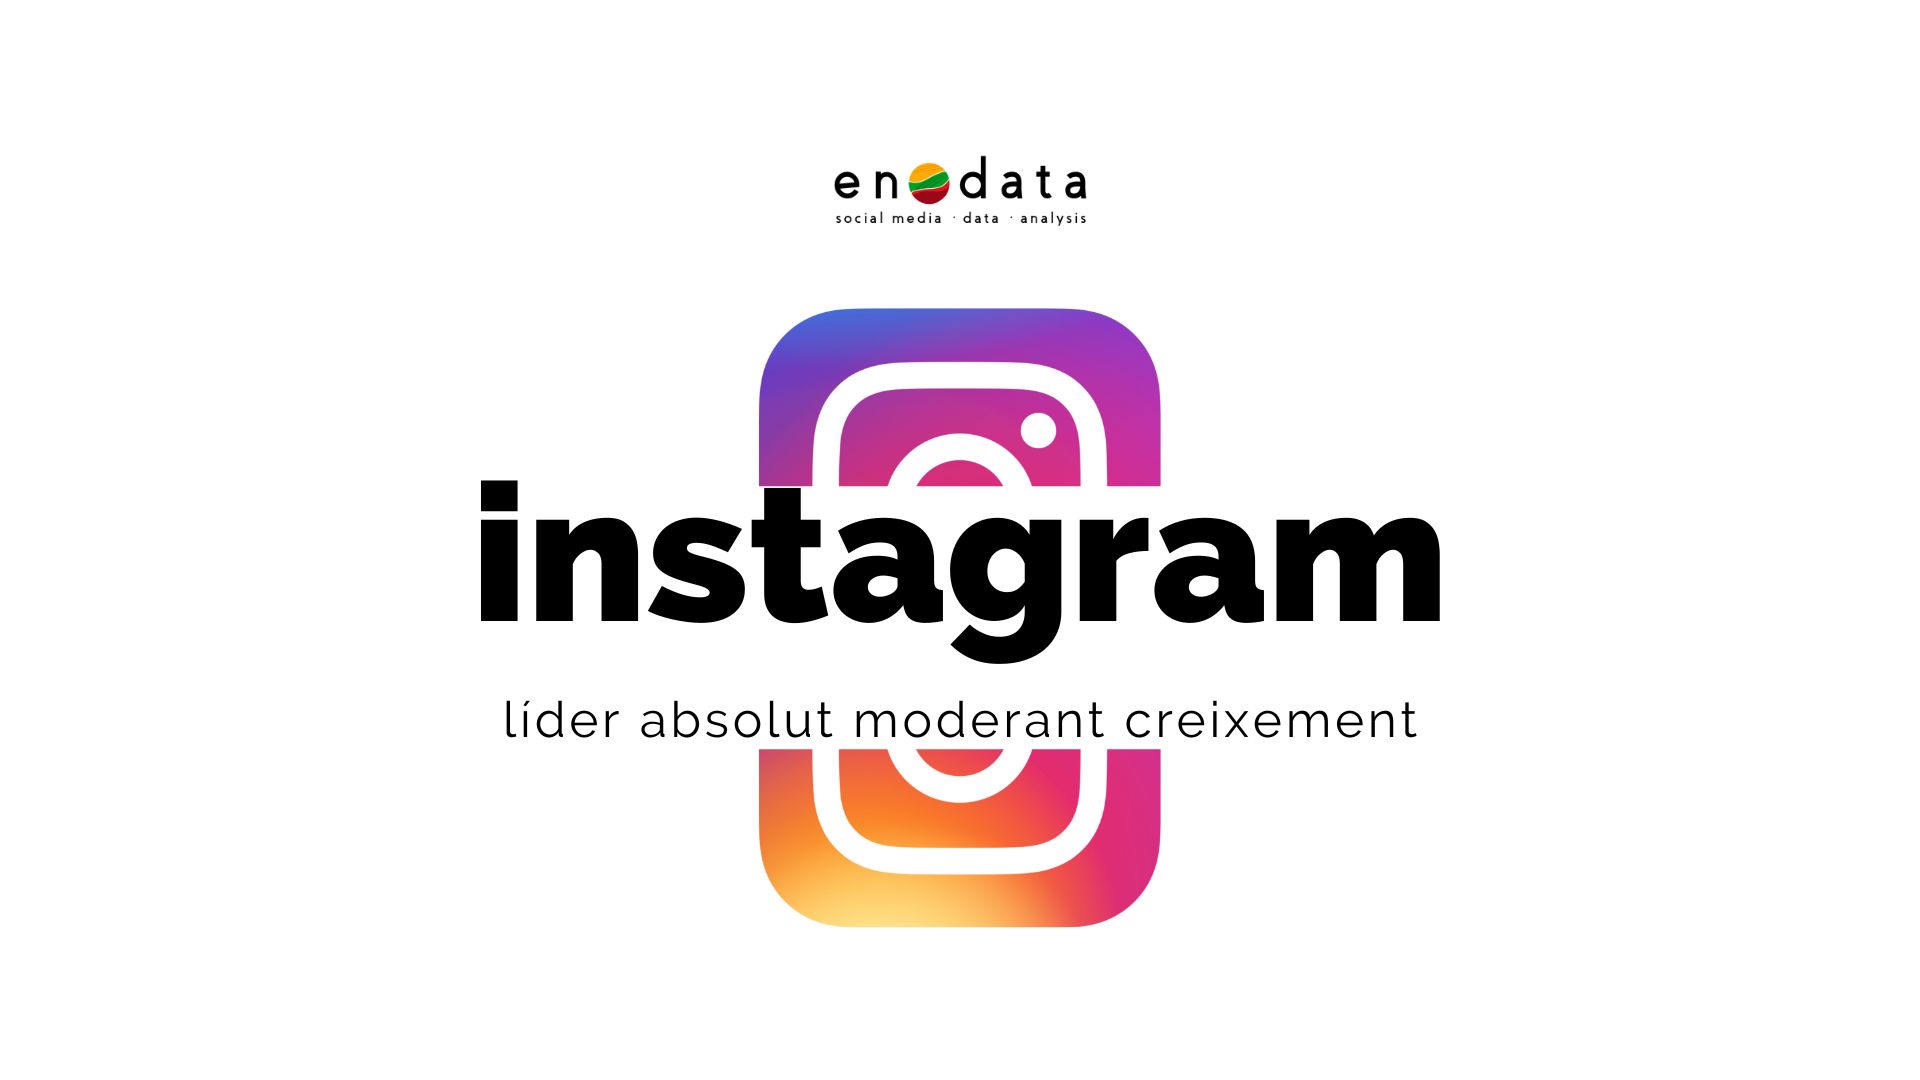 Instagram es manté com la xarxa social preferida dels cellers